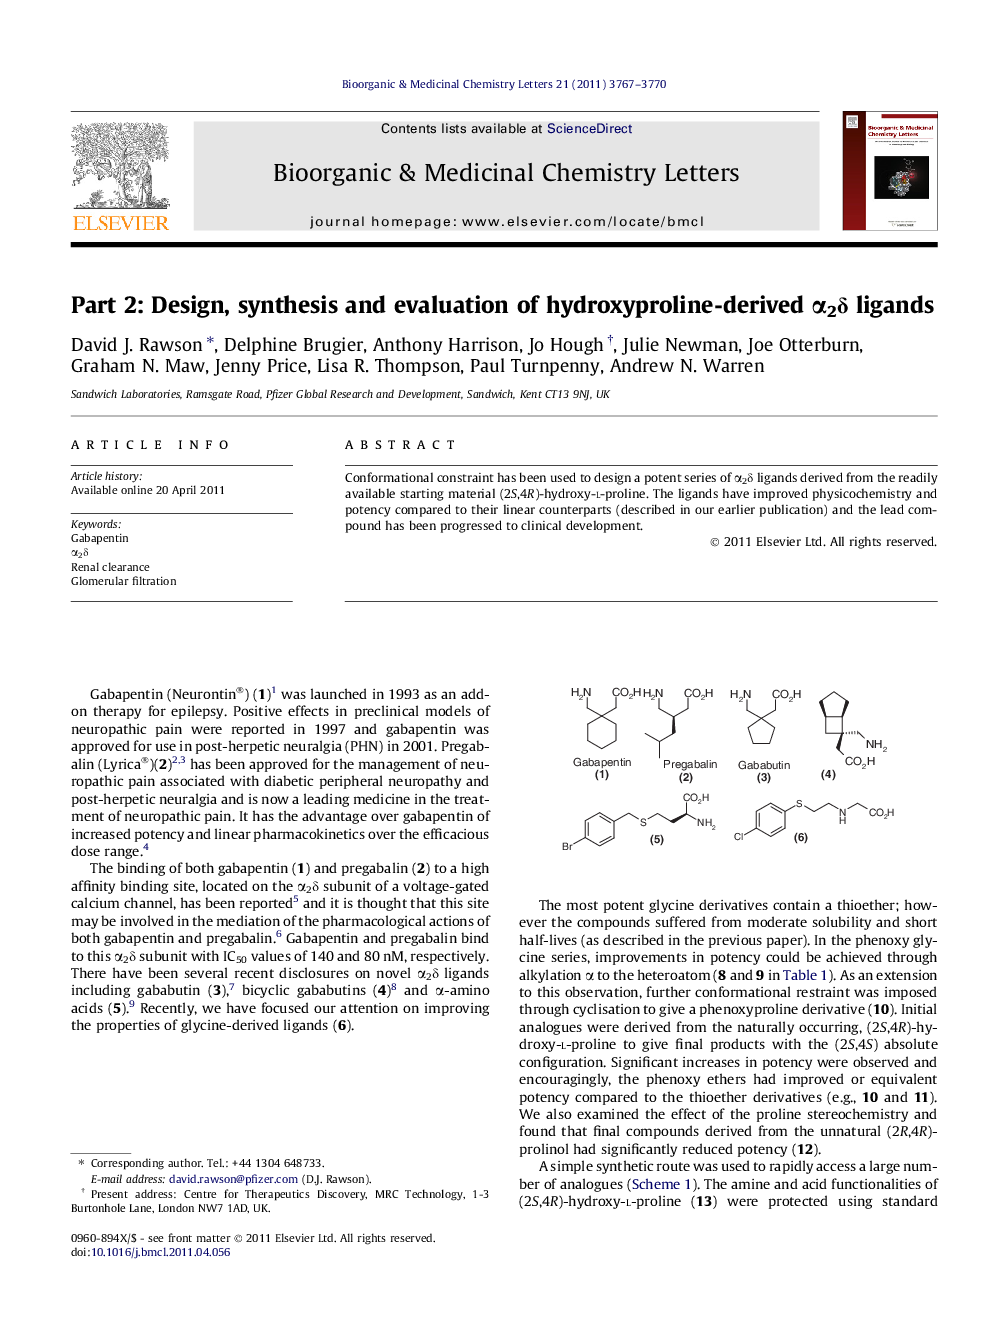 Part 2: Design, synthesis and evaluation of hydroxyproline-derived α2δ ligands